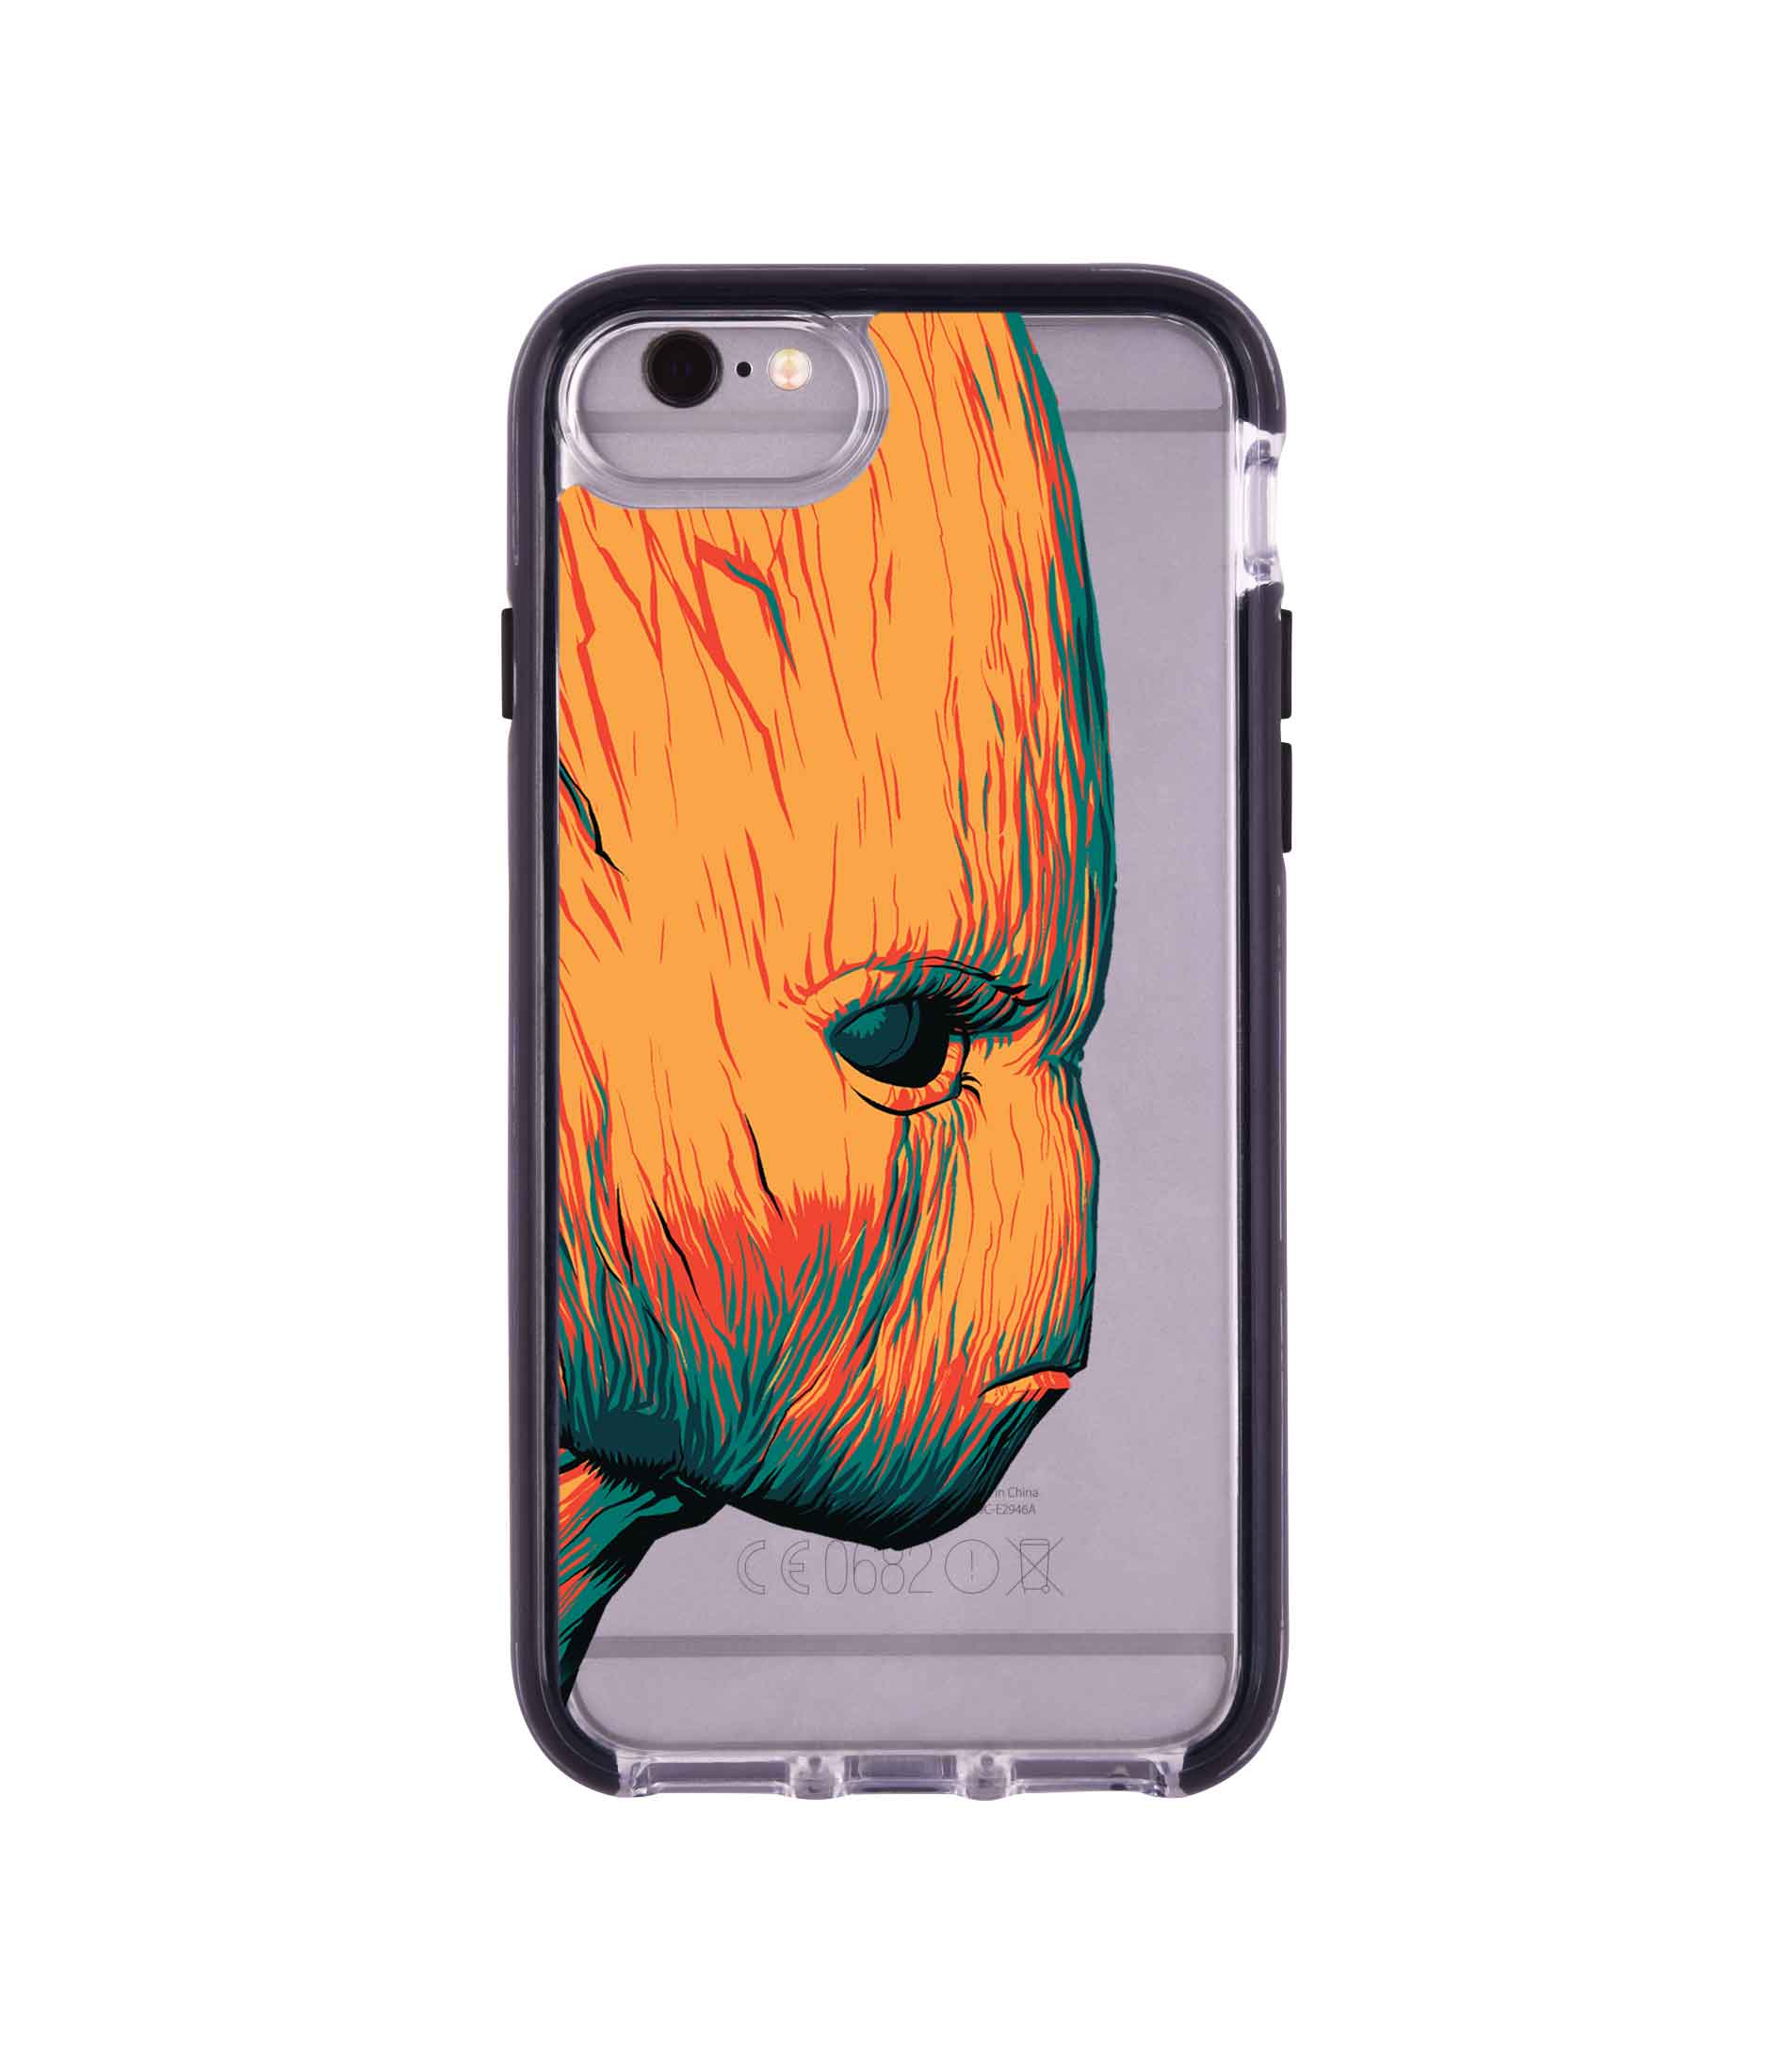 Illuminated Groot - Extreme Phone Case for iPhone 6